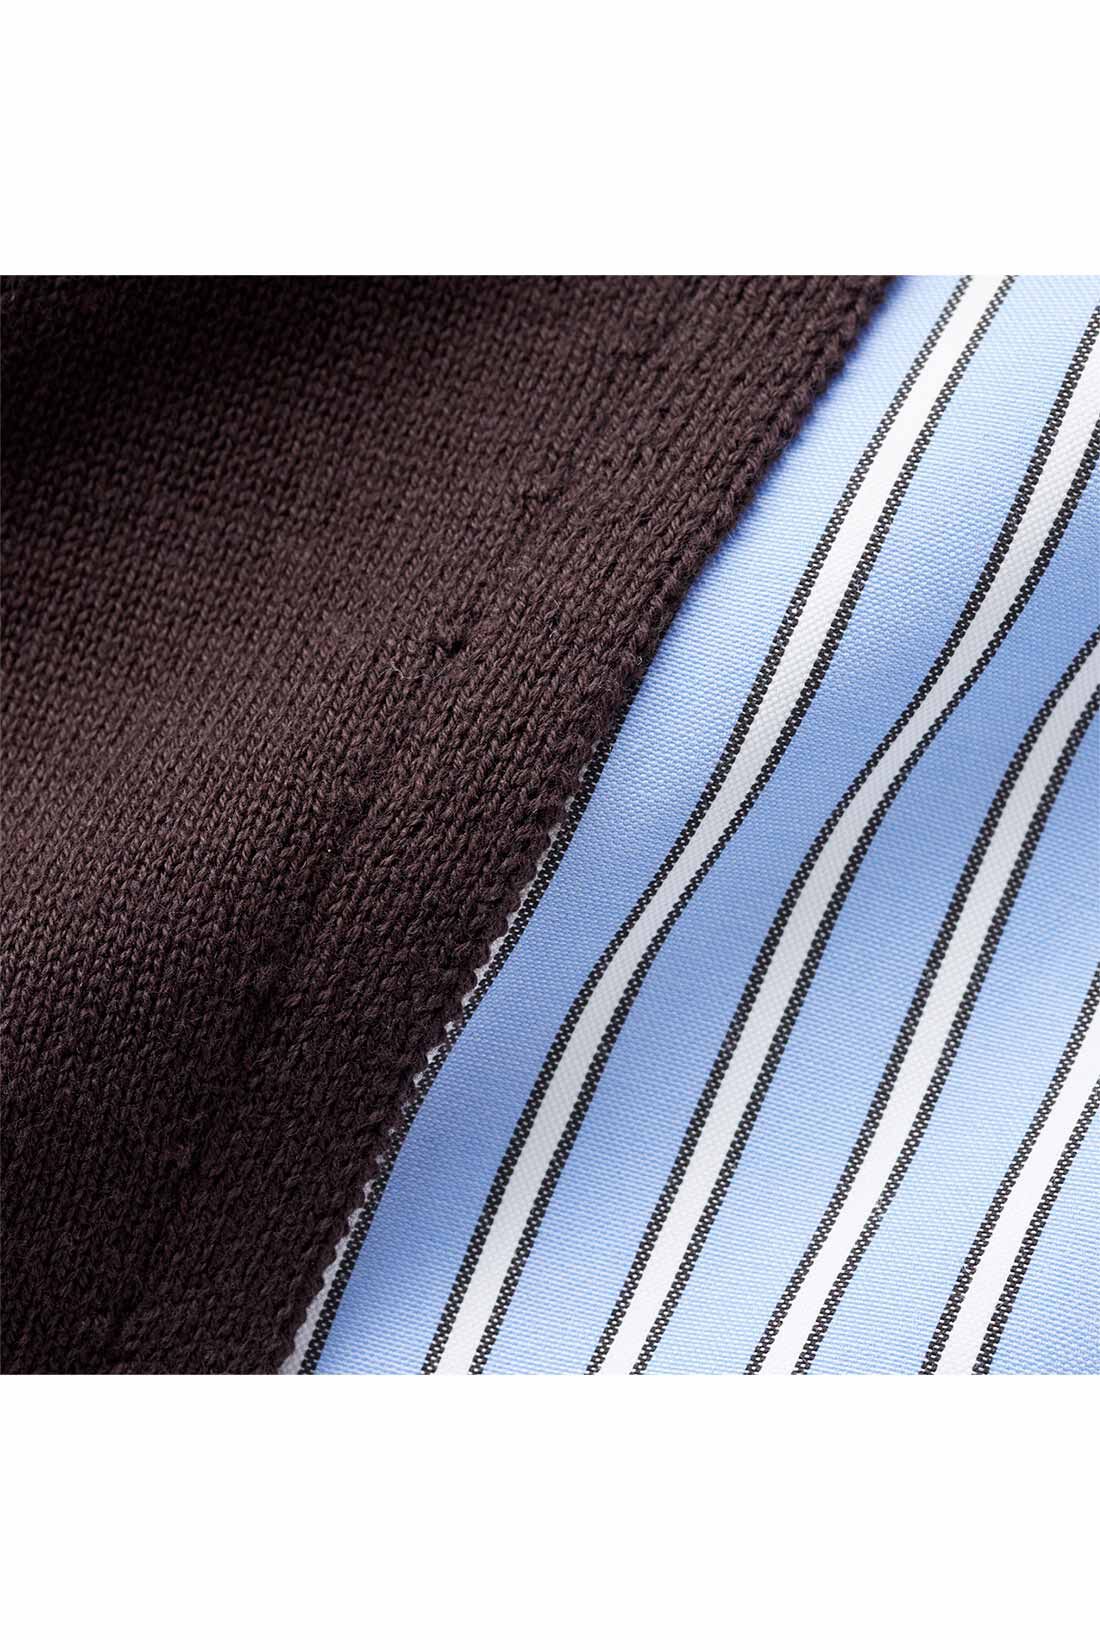 IEDIT|IEDIT[イディット]　異素材切り替えのストライプシャツ ドッキングニットトップス〈ブラック〉|秋口からさらっと着られるコットンニットとストライプシャツの組み合わせ。